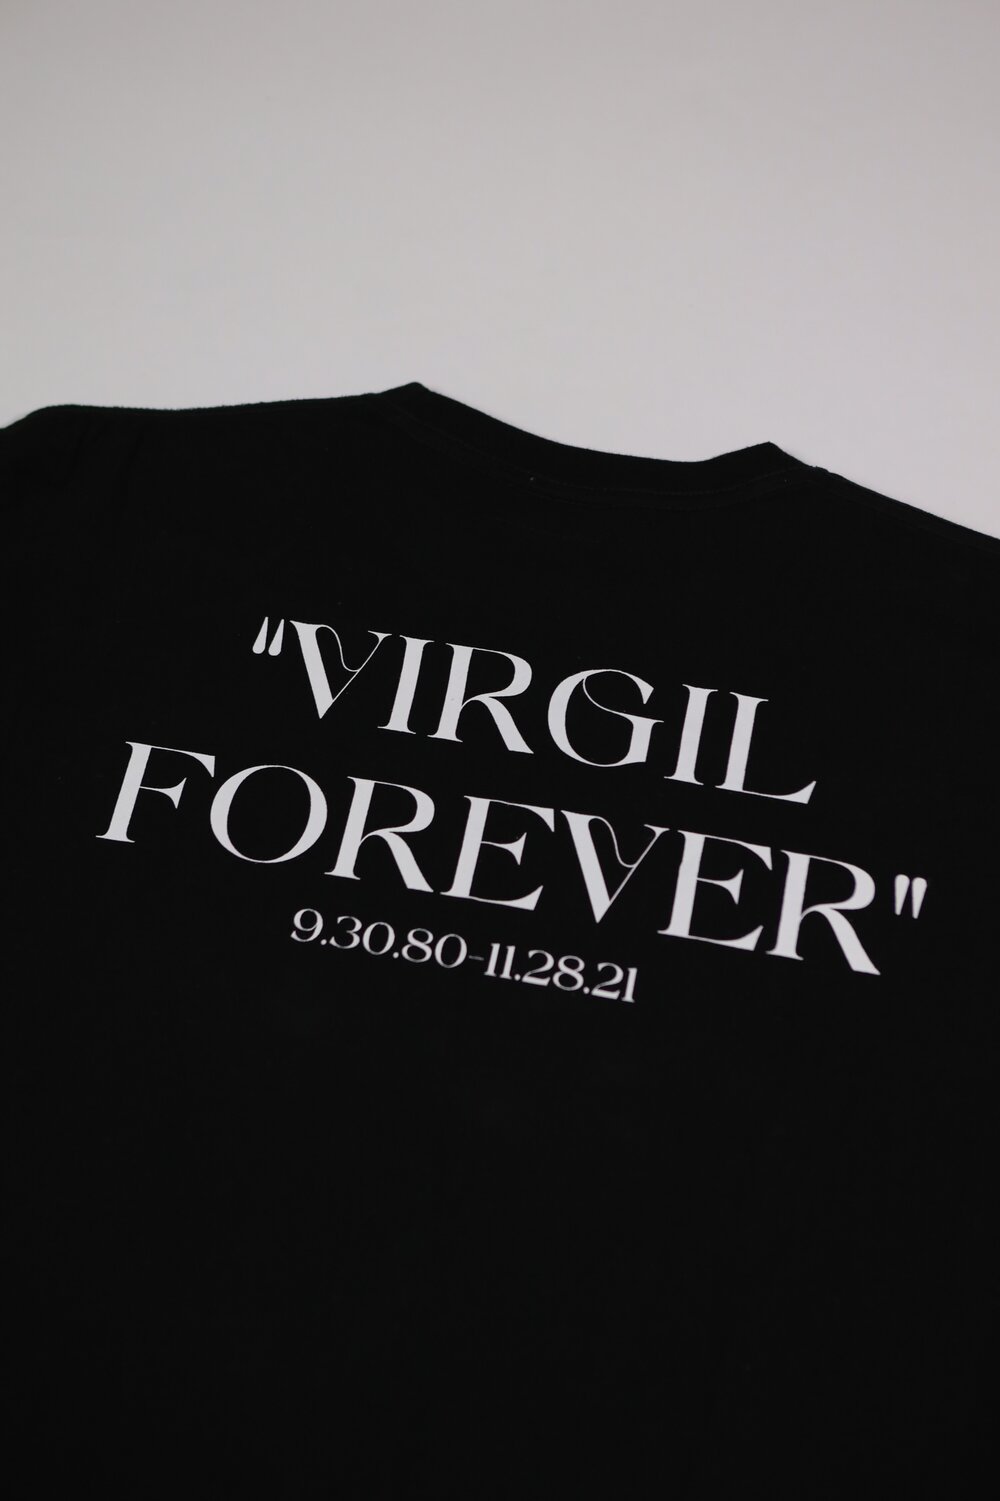 Virgil Forever DRMRS NVR SLEEP BHM Tee — The Dream is Real